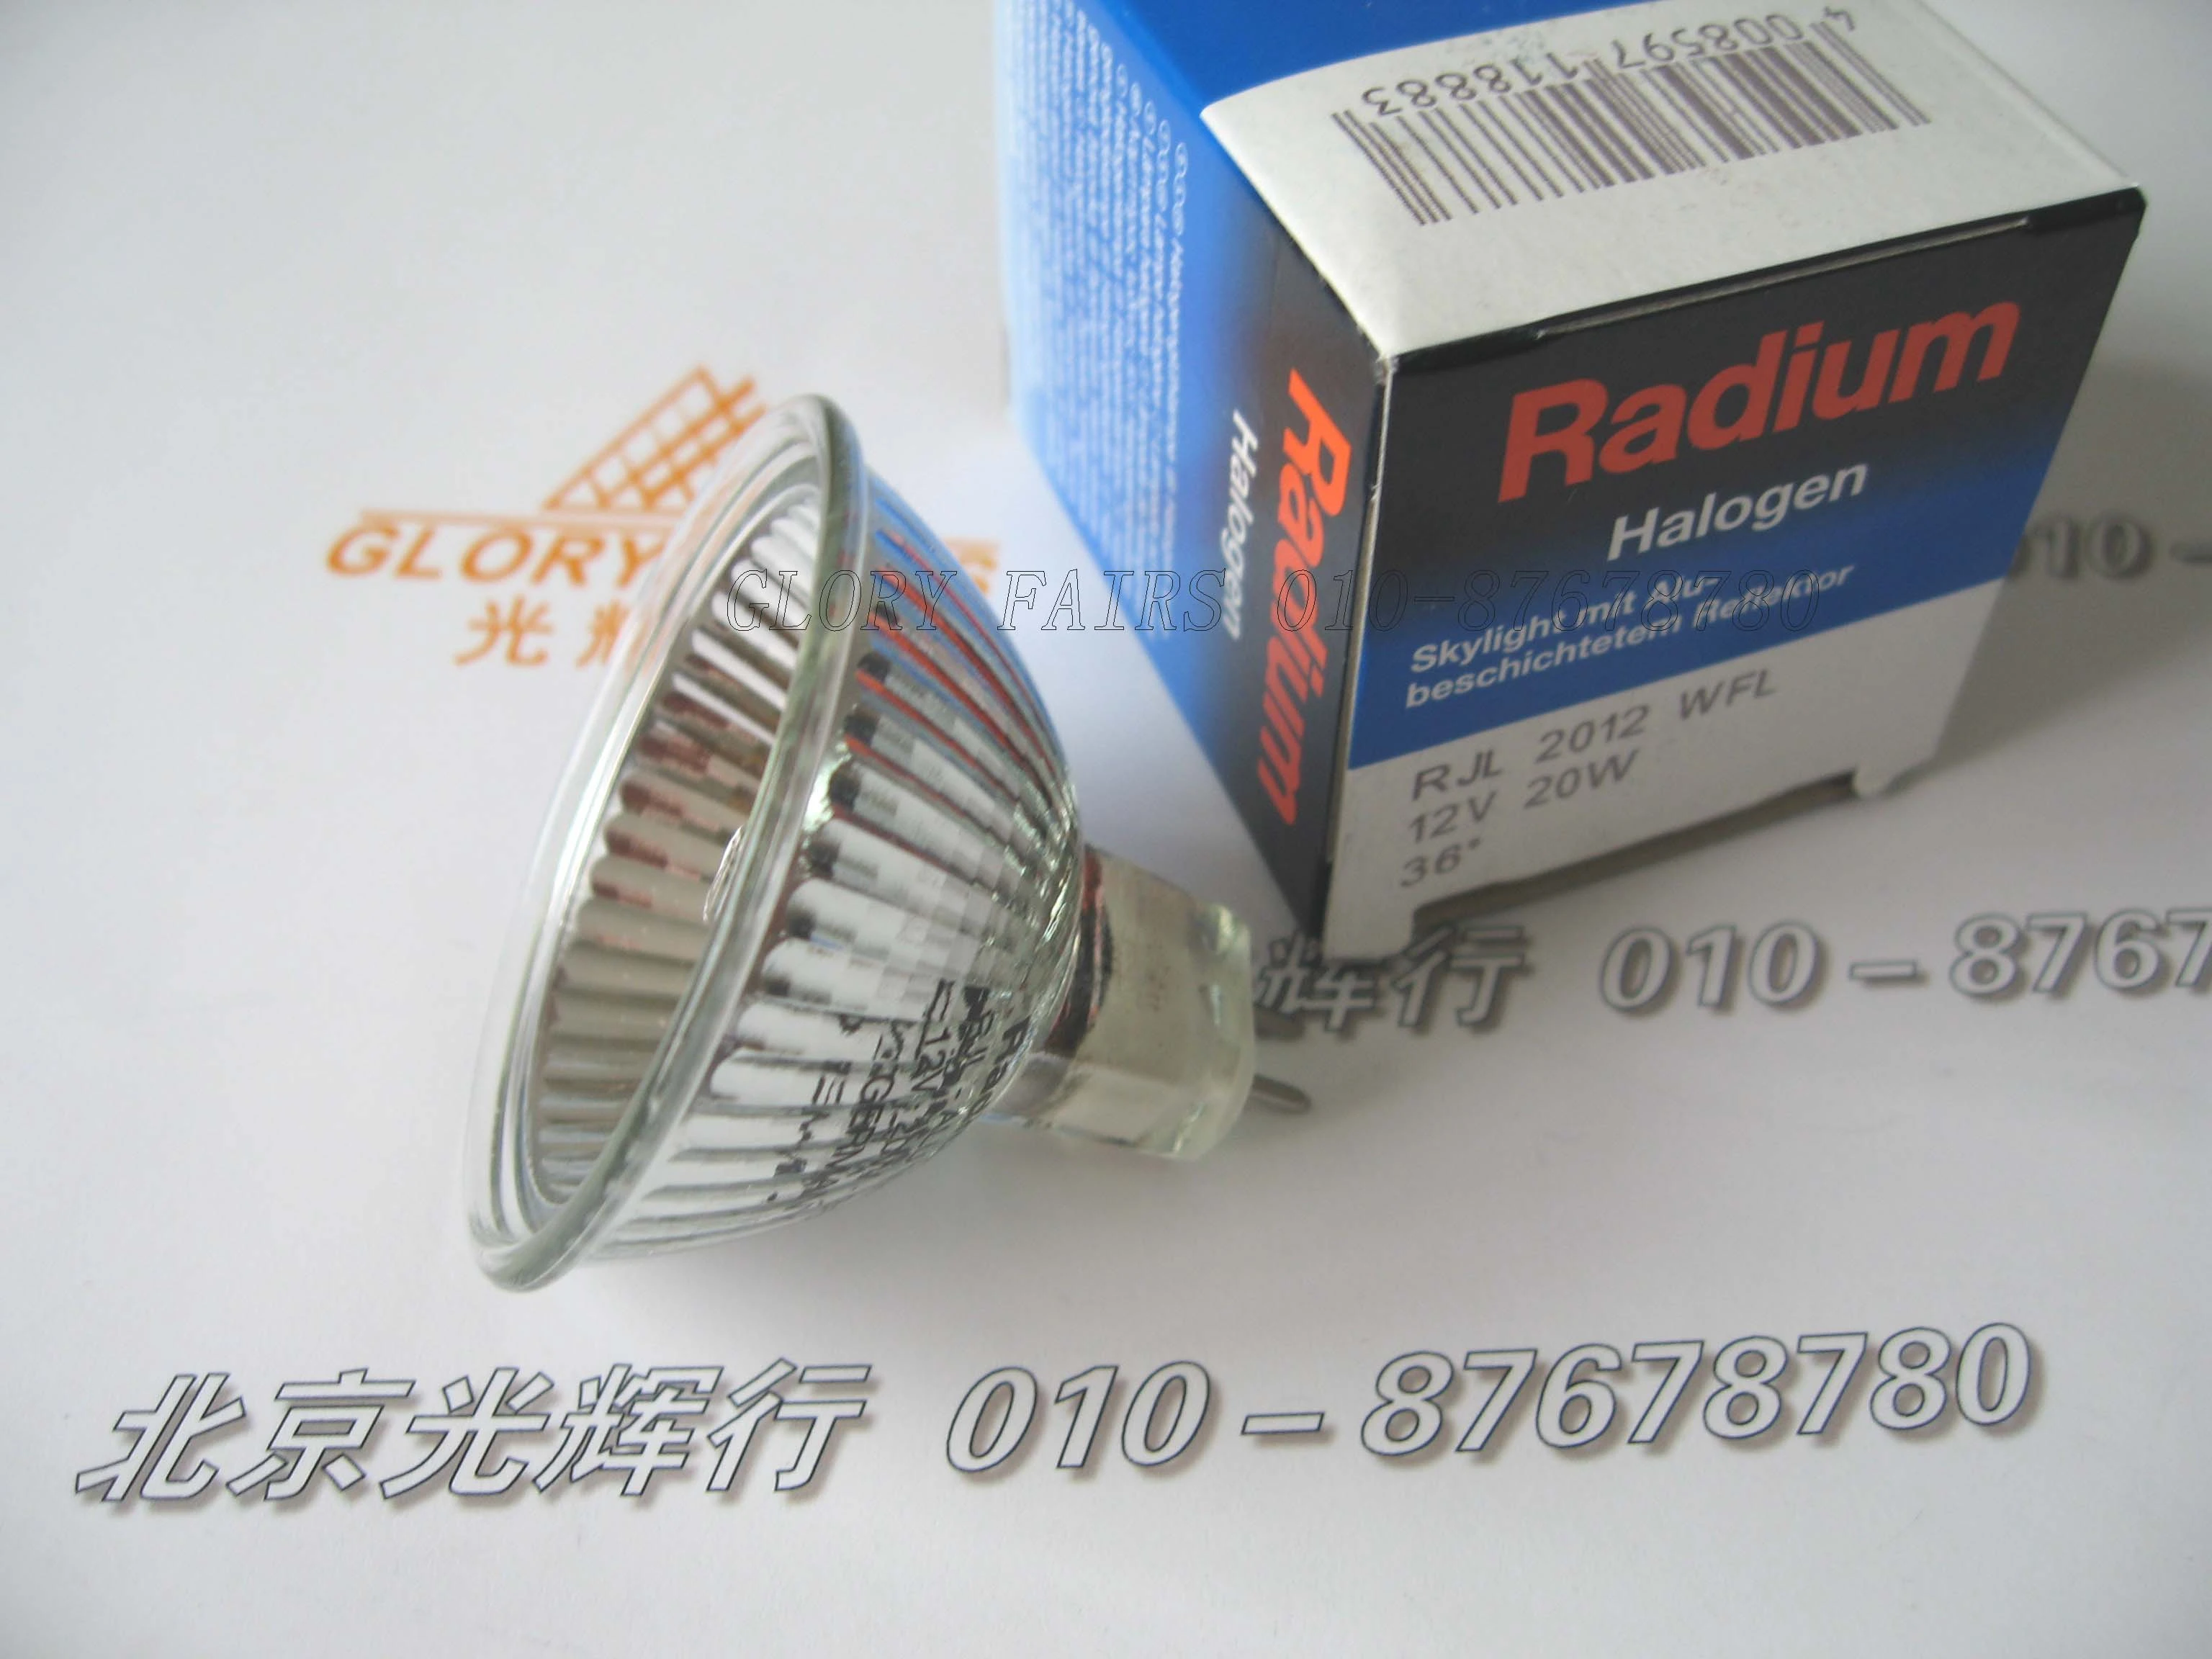 Radium Lamp,rjl 2012 20w Wfl,12v20w 36 Degree Aluminum Coated Reflector,diameter 51mm Mr16 Glass Cover Bulb - Light - AliExpress